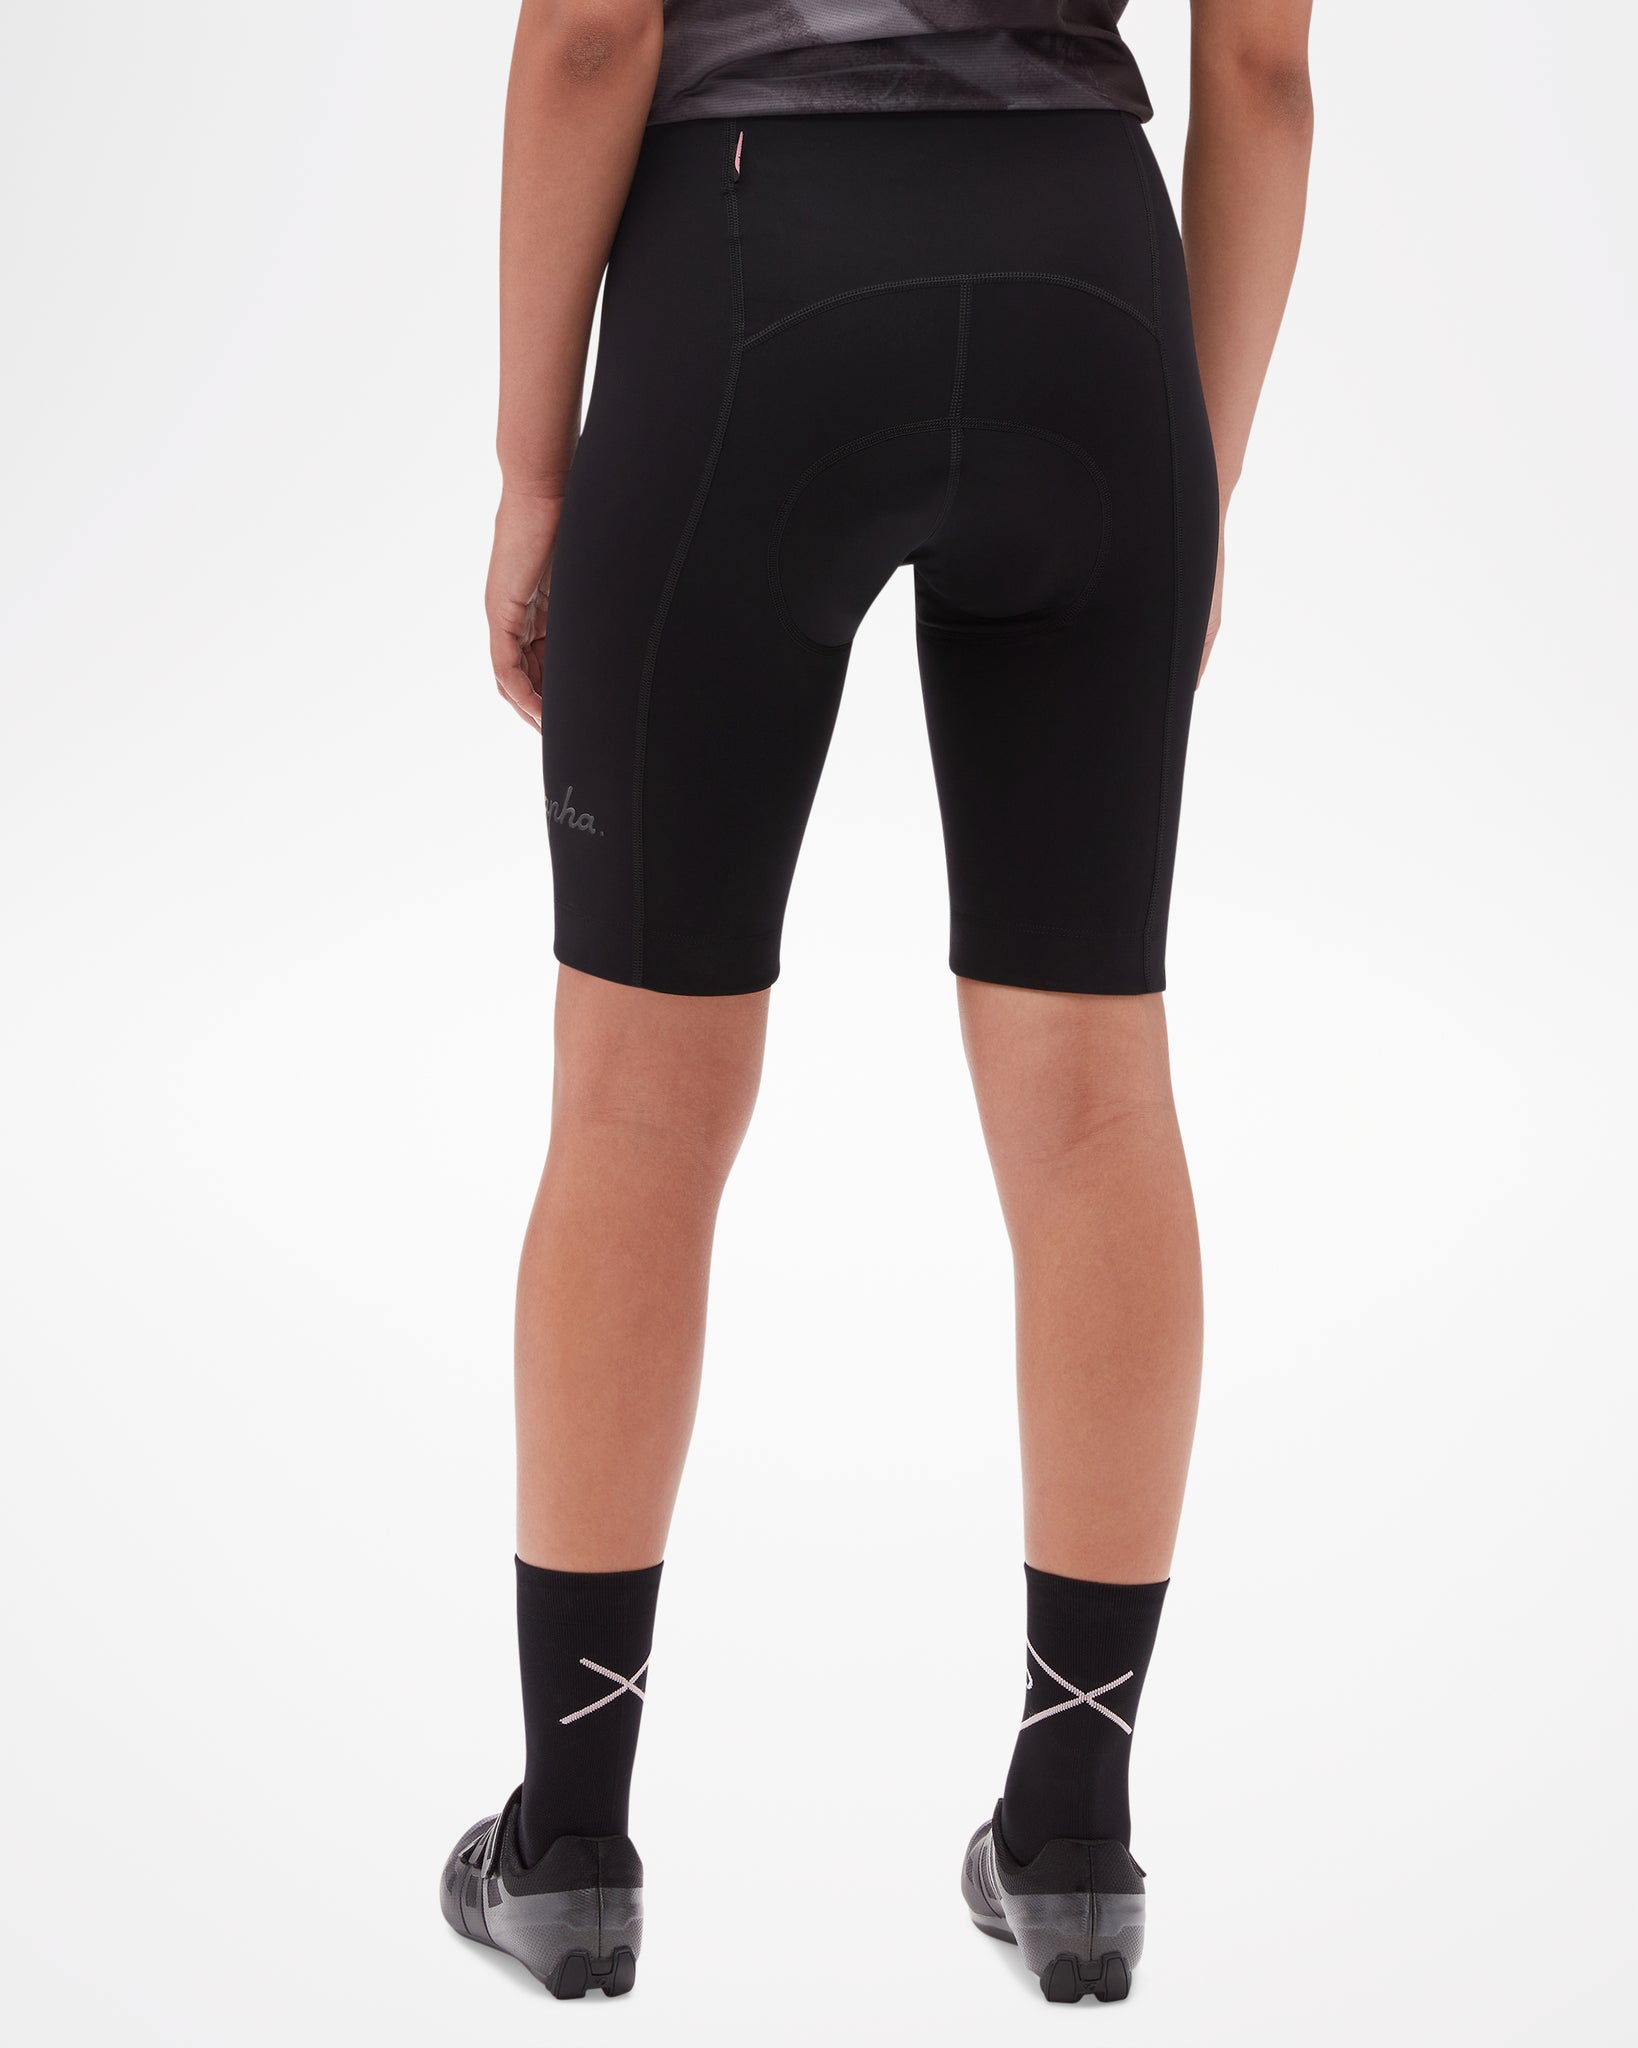 Women's Classic Shorts - Regular Back